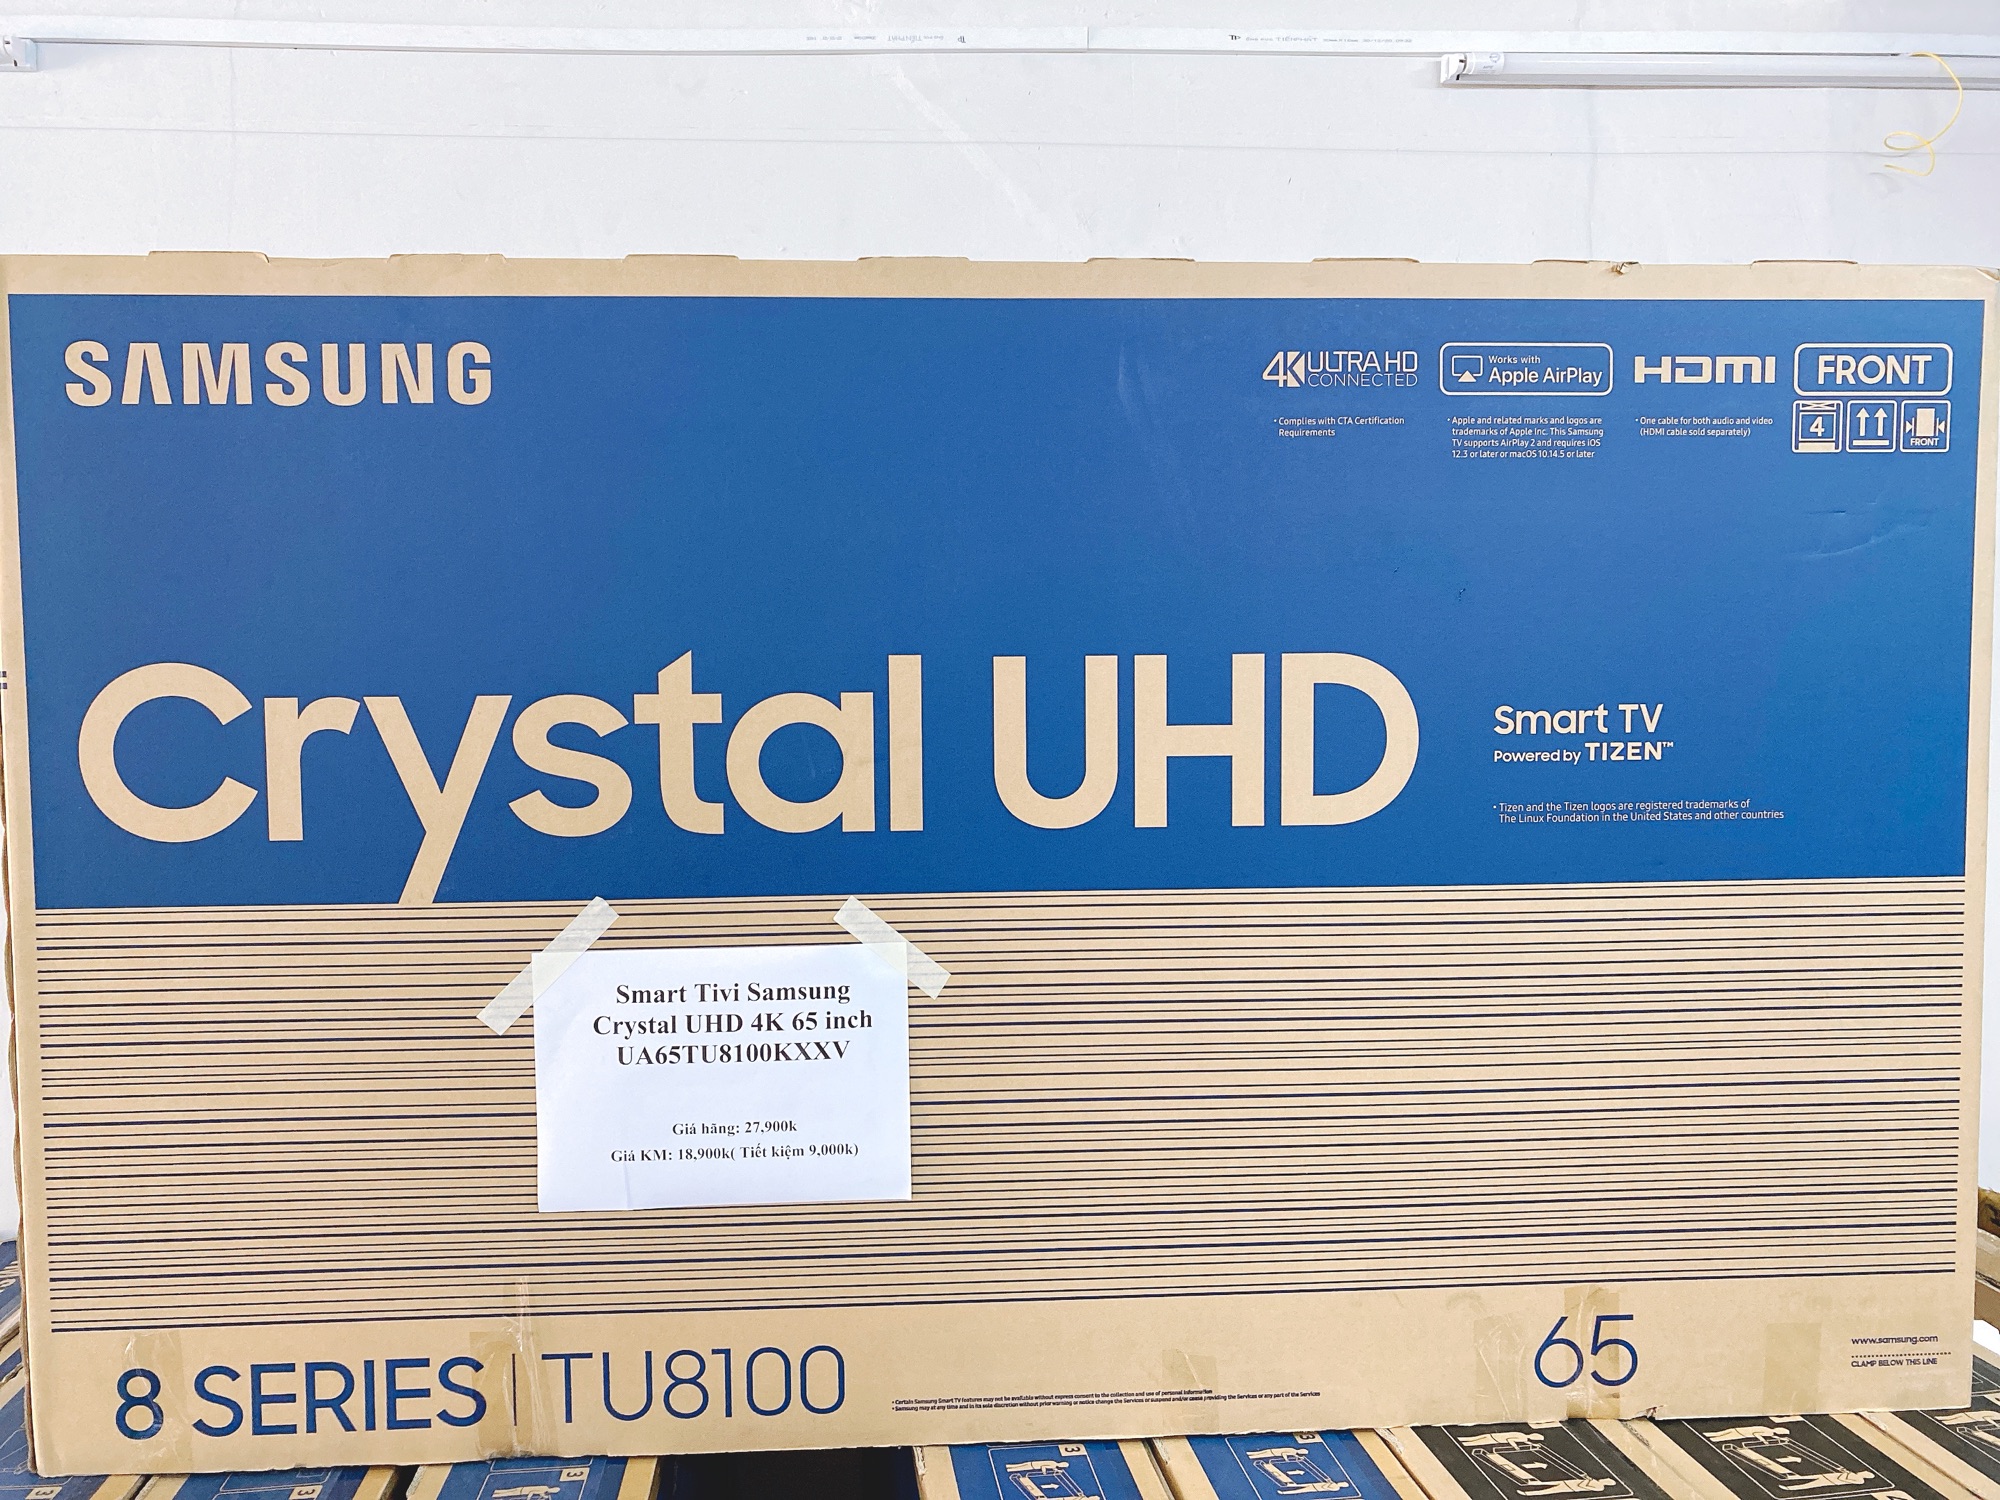 Smart TV Samsung Crystal UHD 4K 65 inch UA65TU8100